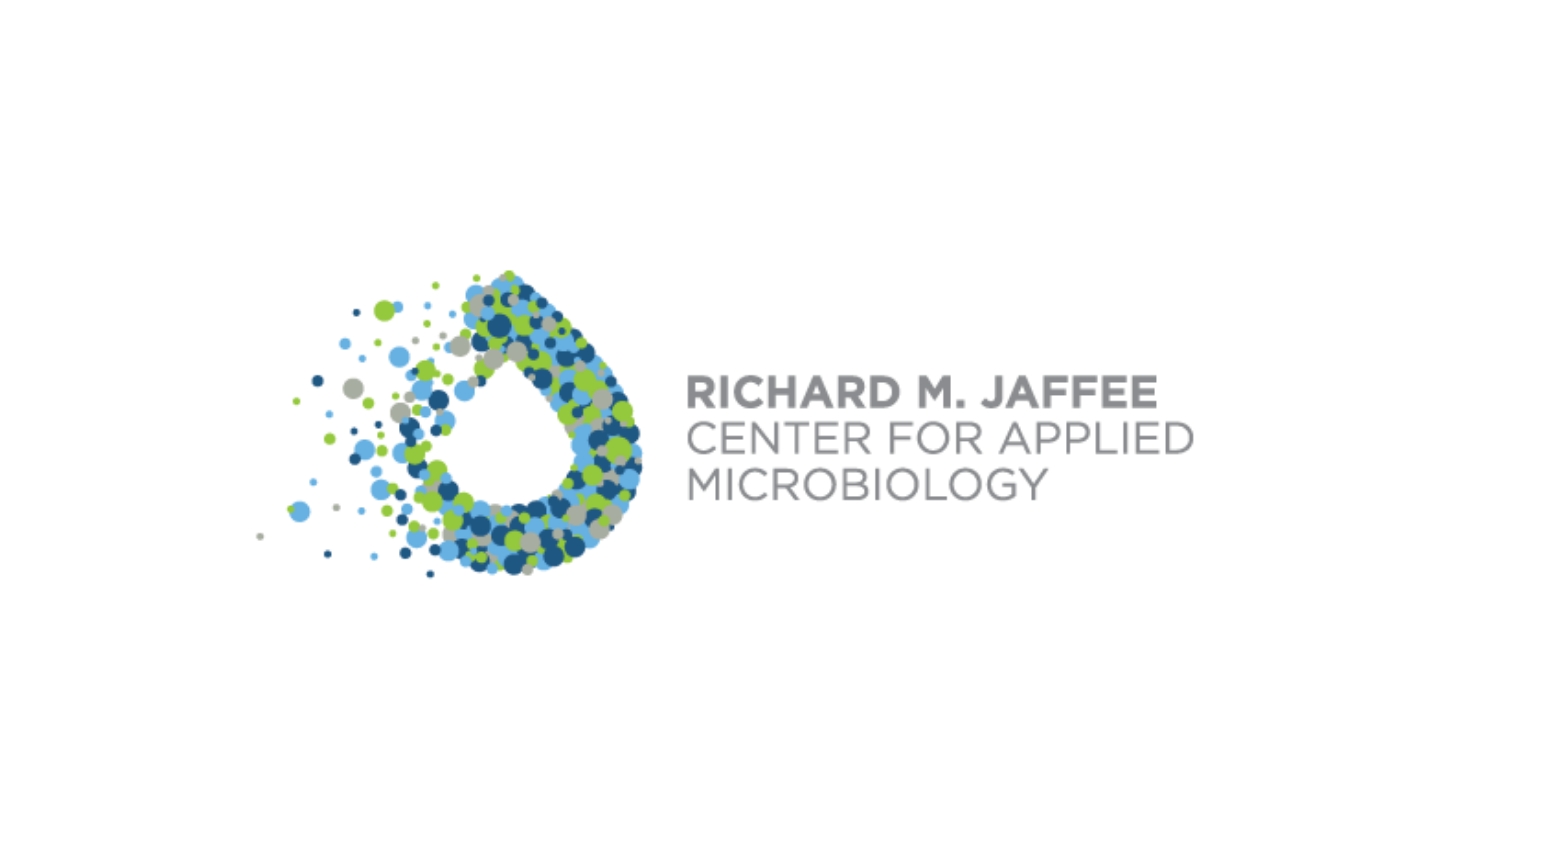 Richard M. Jaffee Center for Applied Microbiology logo.